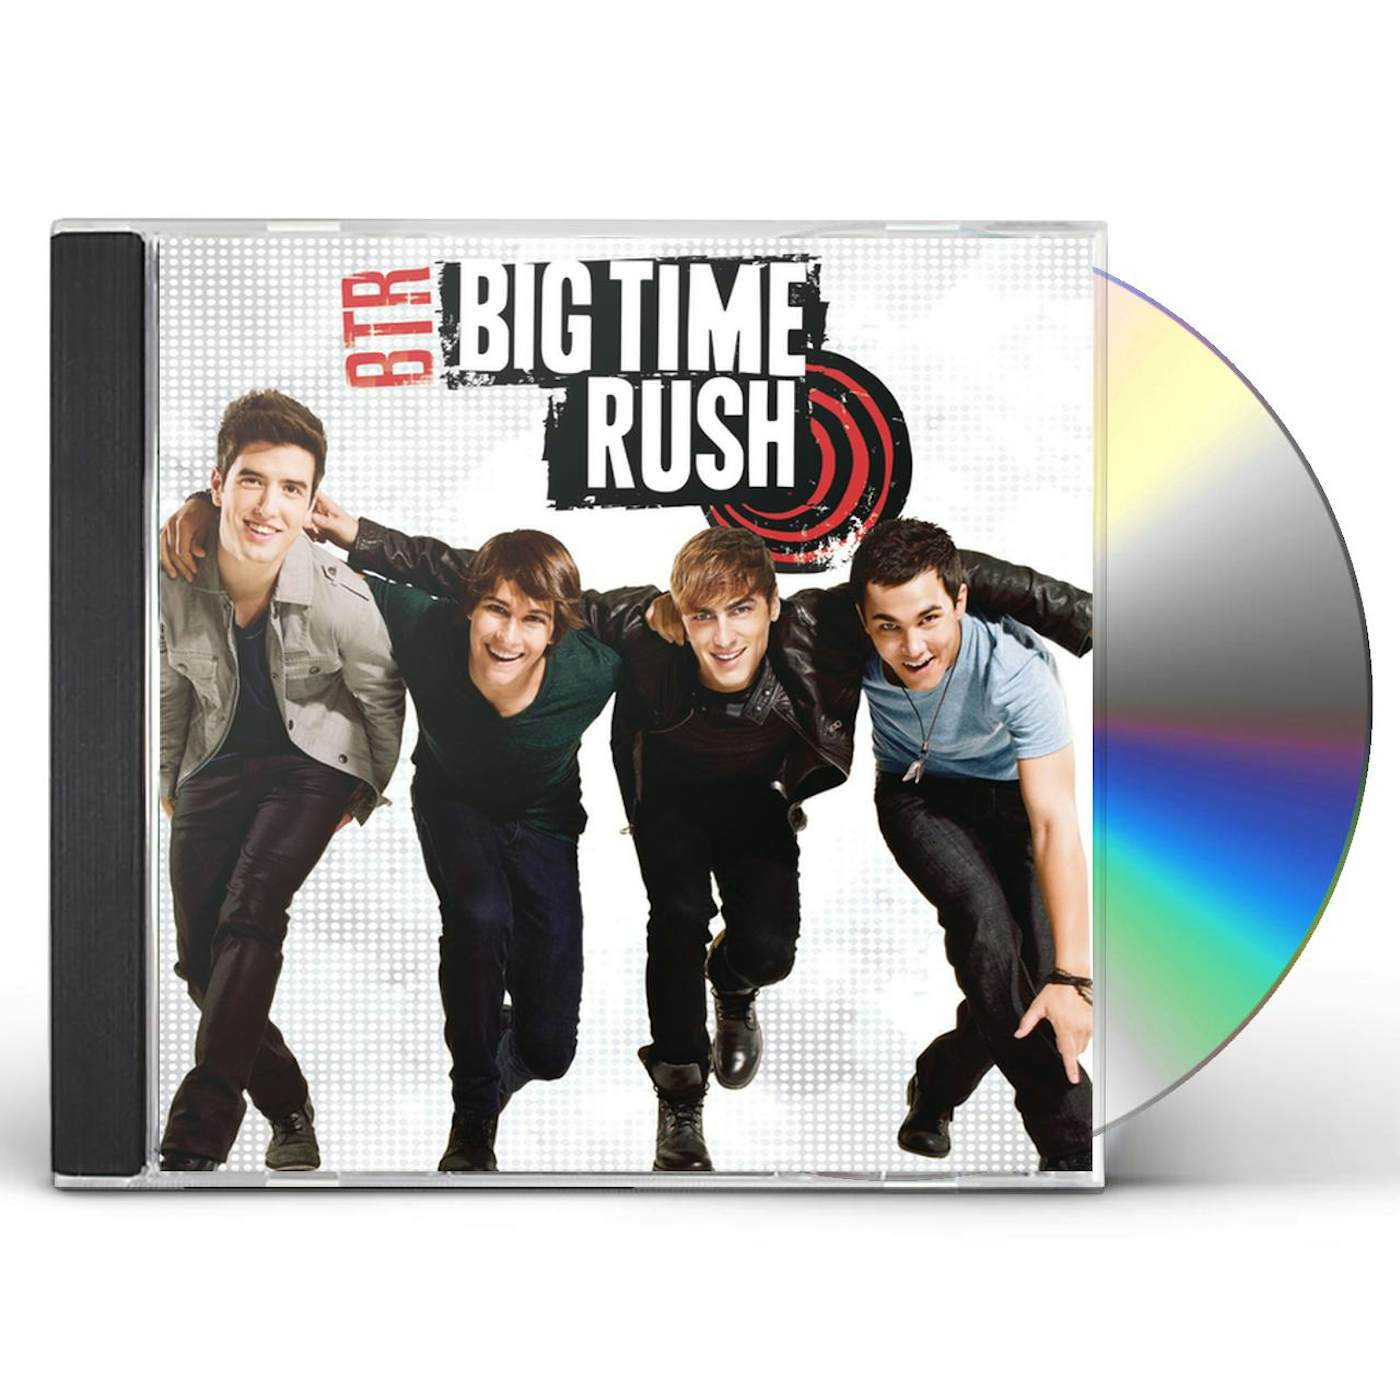 Brand New Sealed BTR Big Time Rush CD